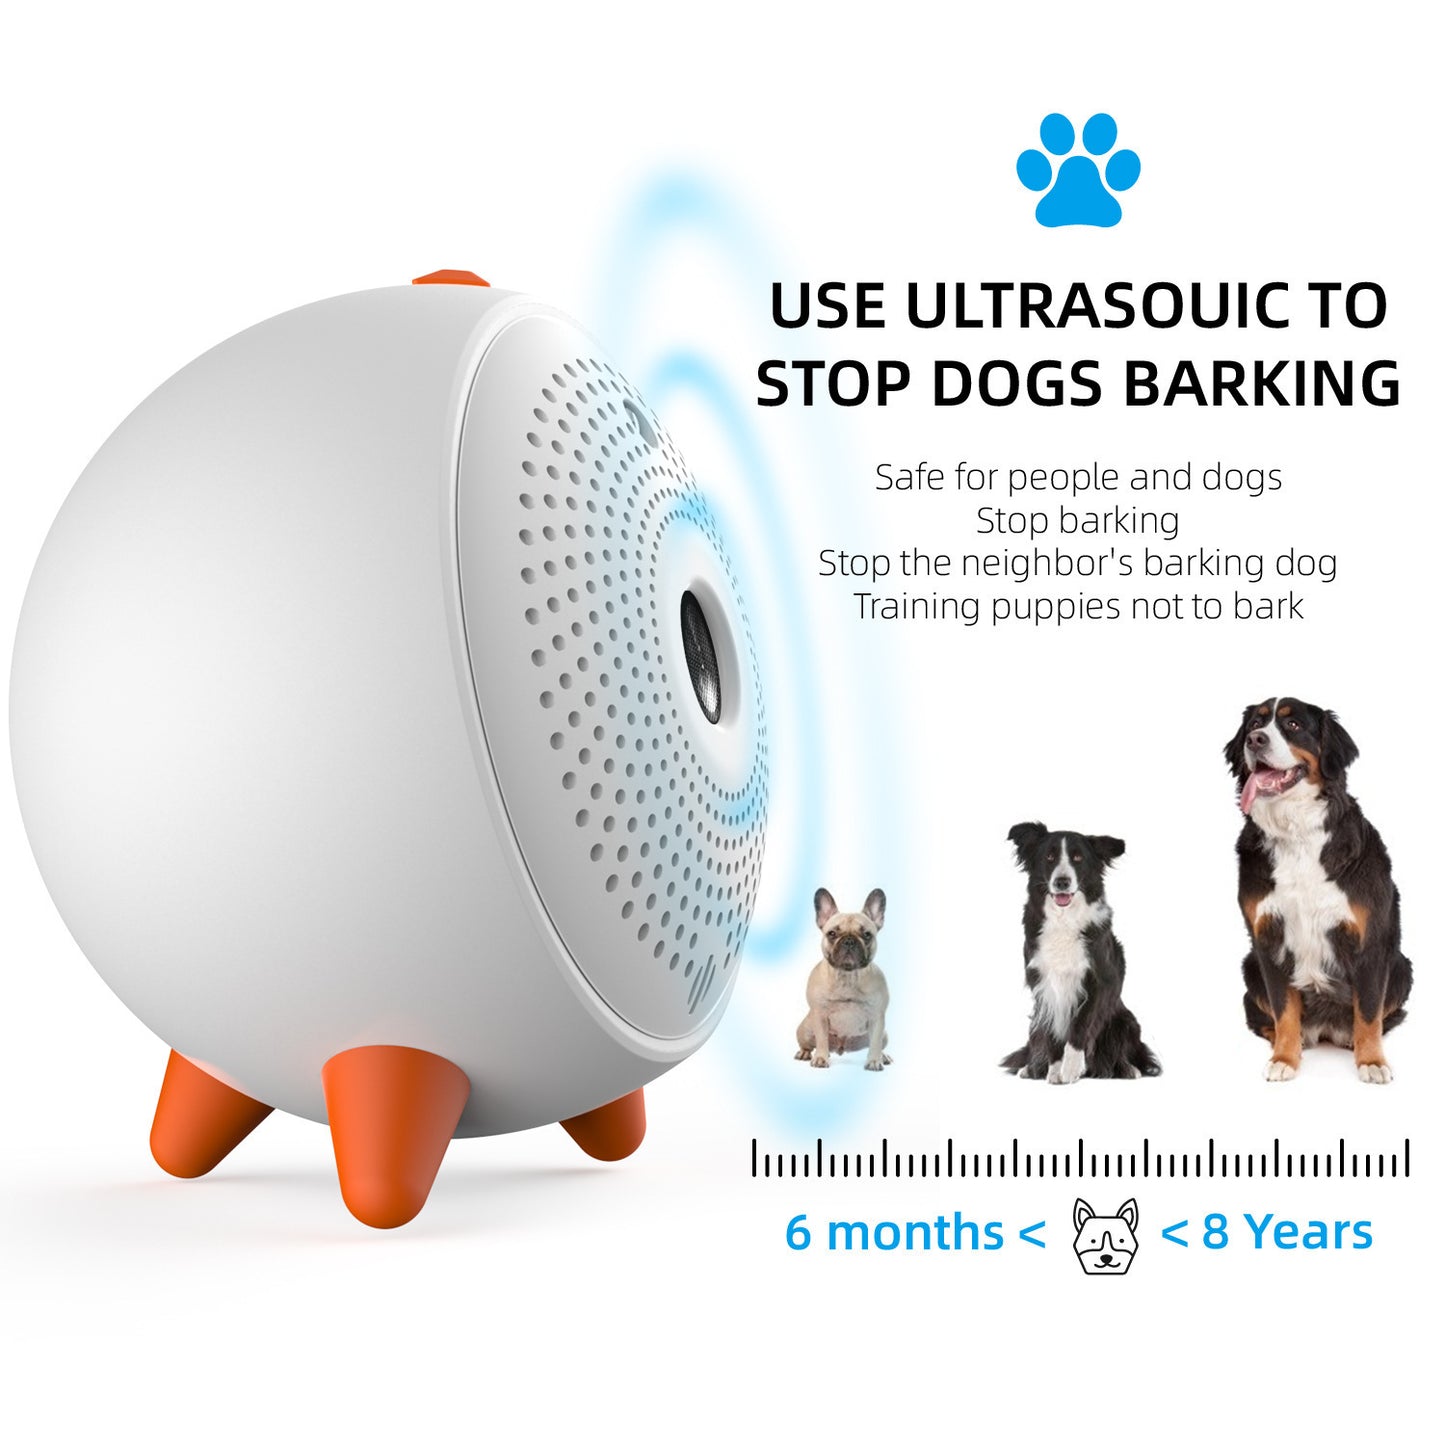 Ultrasonic Bark Stop: Effective Pet-Friendly Solution